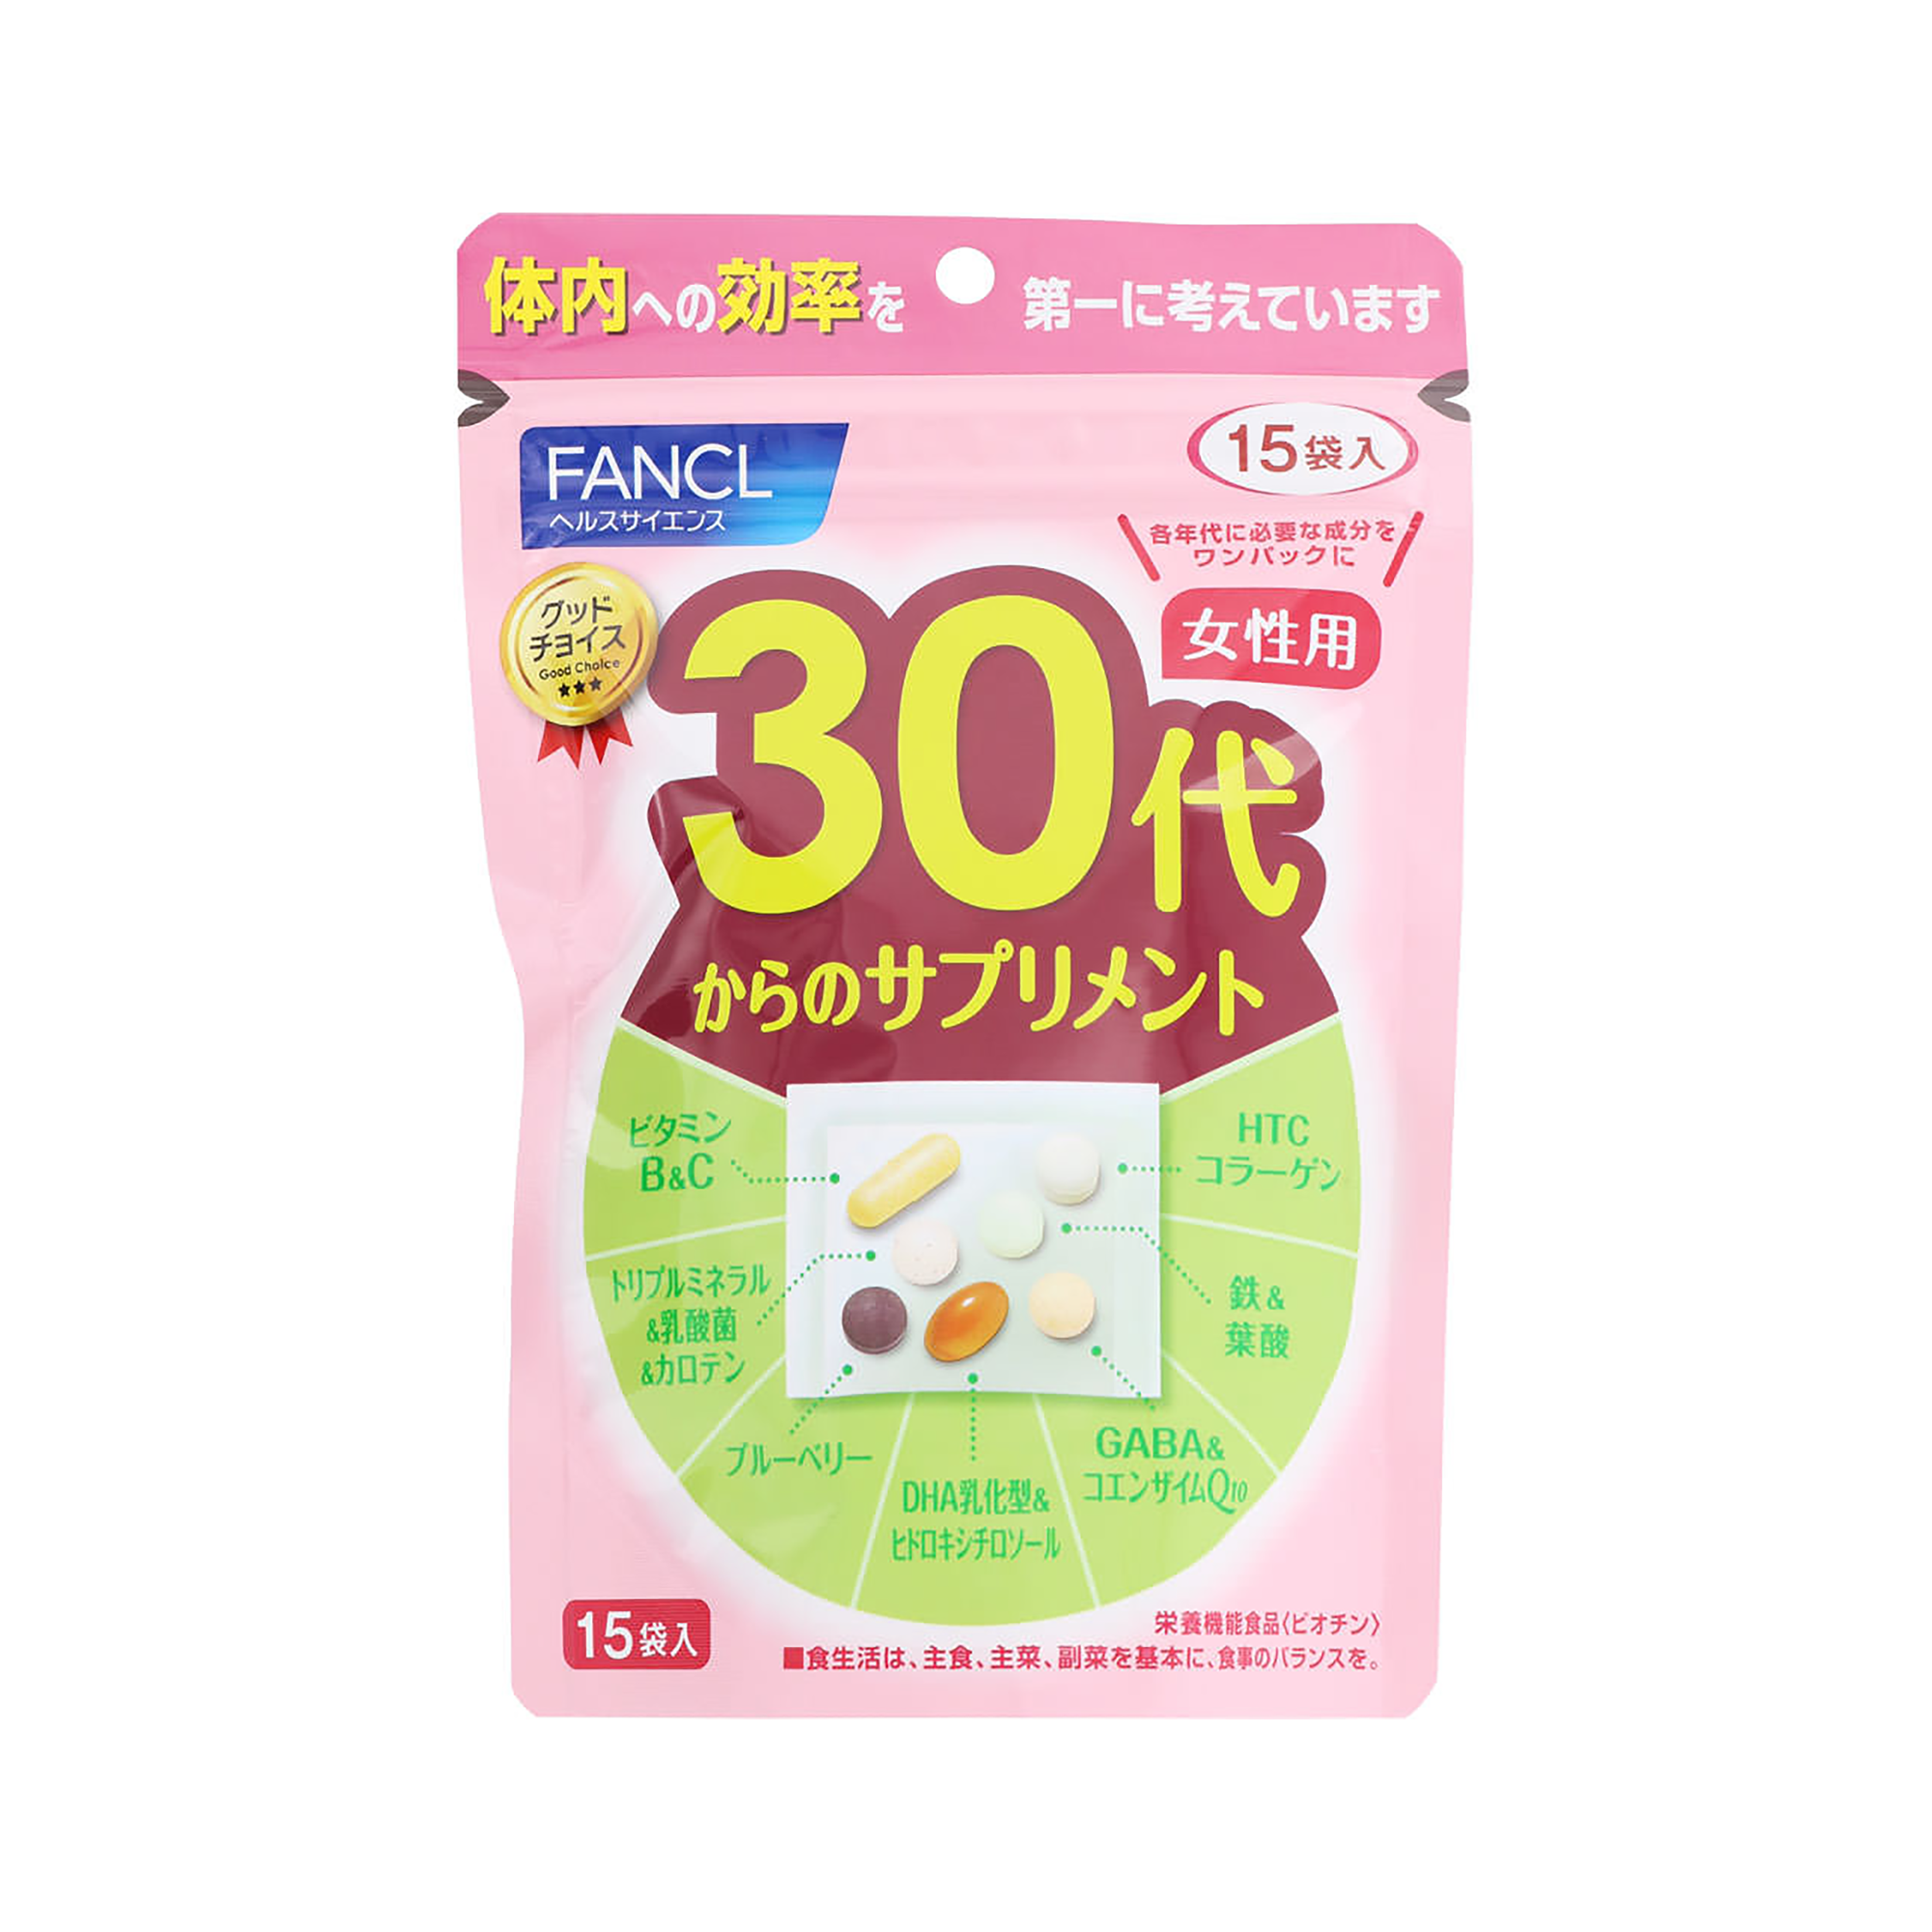 FANCL 30代女性补充剂 7粒×15袋